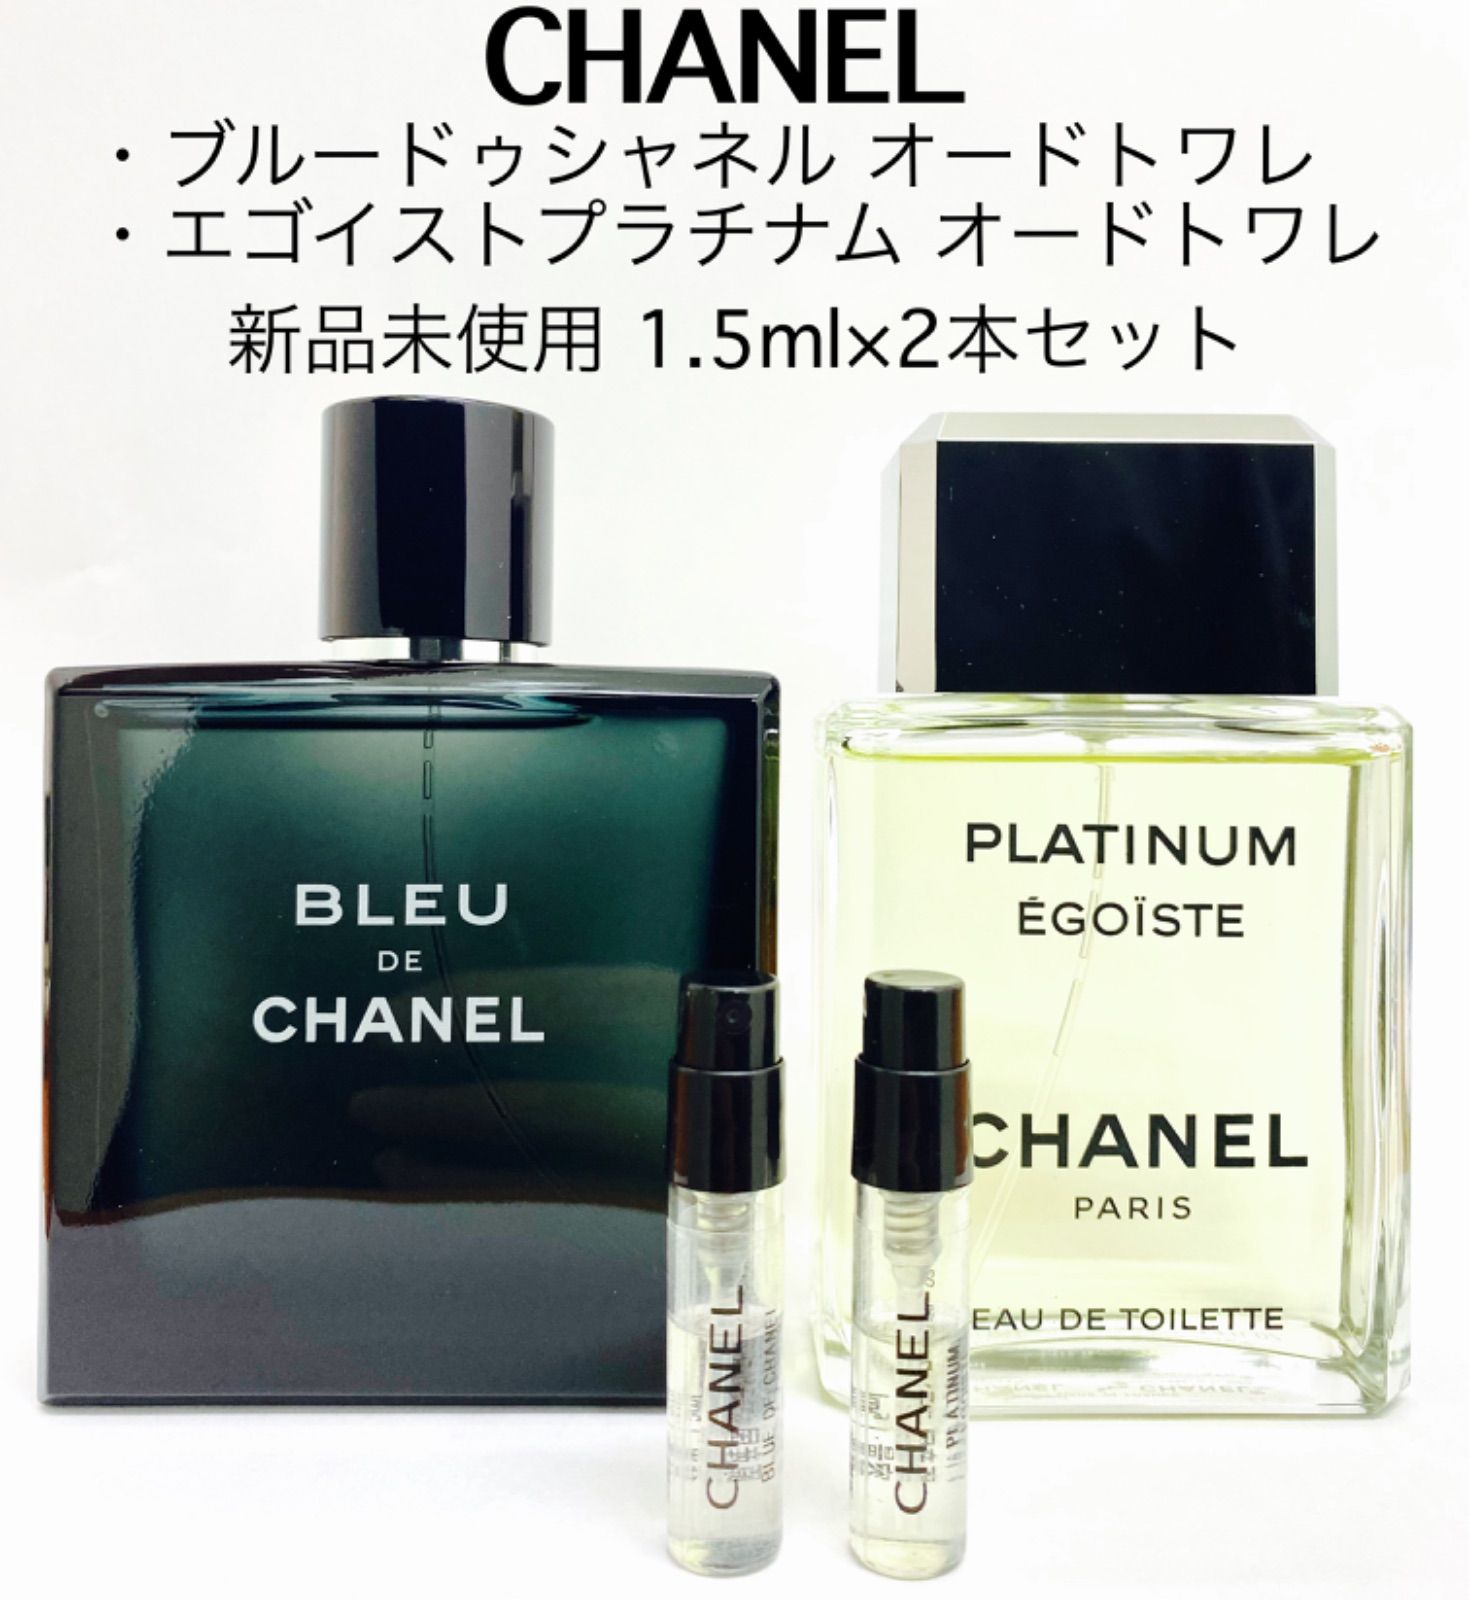 CHANEL シャネル ブルードゥ シャネル パルファム サンプル - 香水